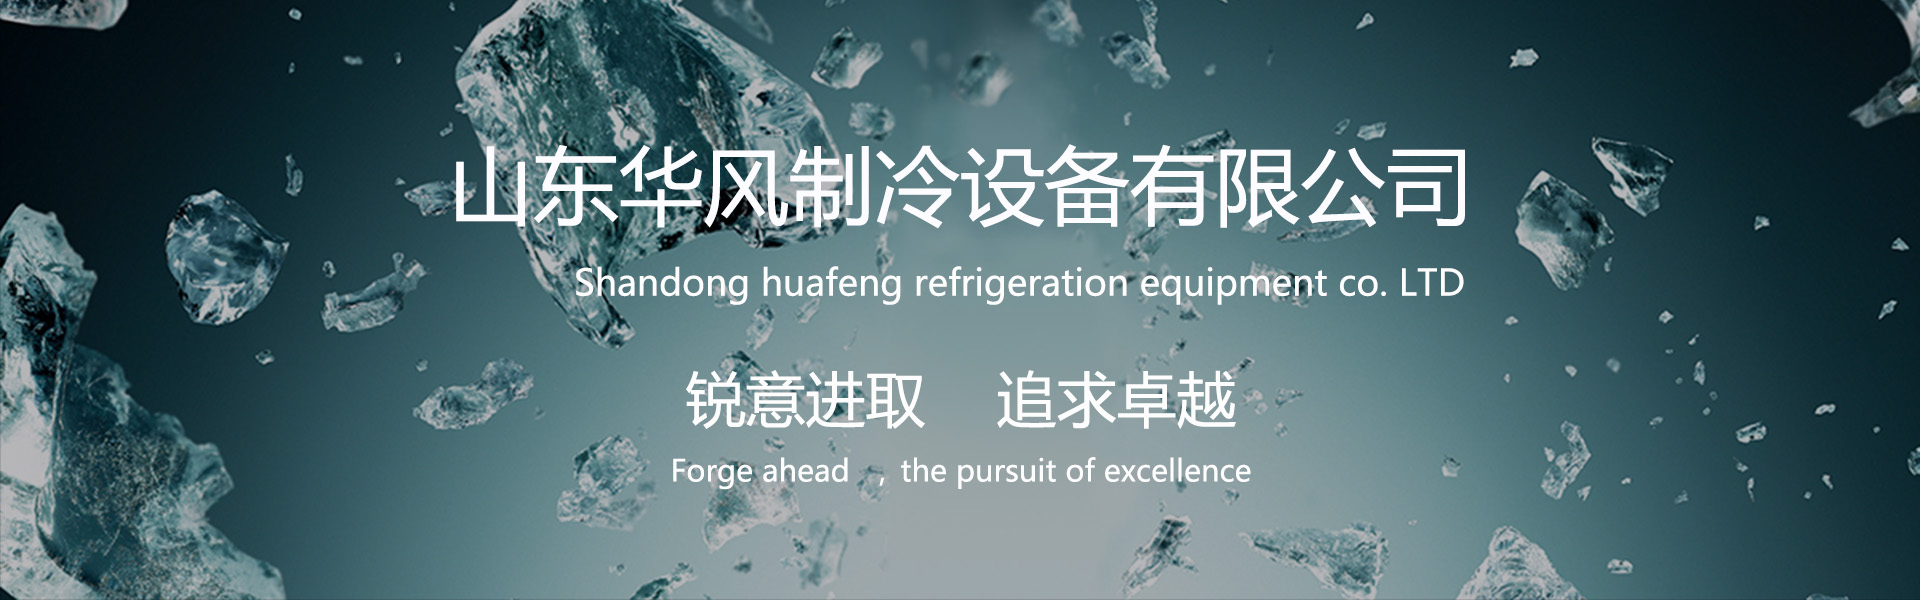 shandong huafeng Refrigeration Equipment Co., Ltd.